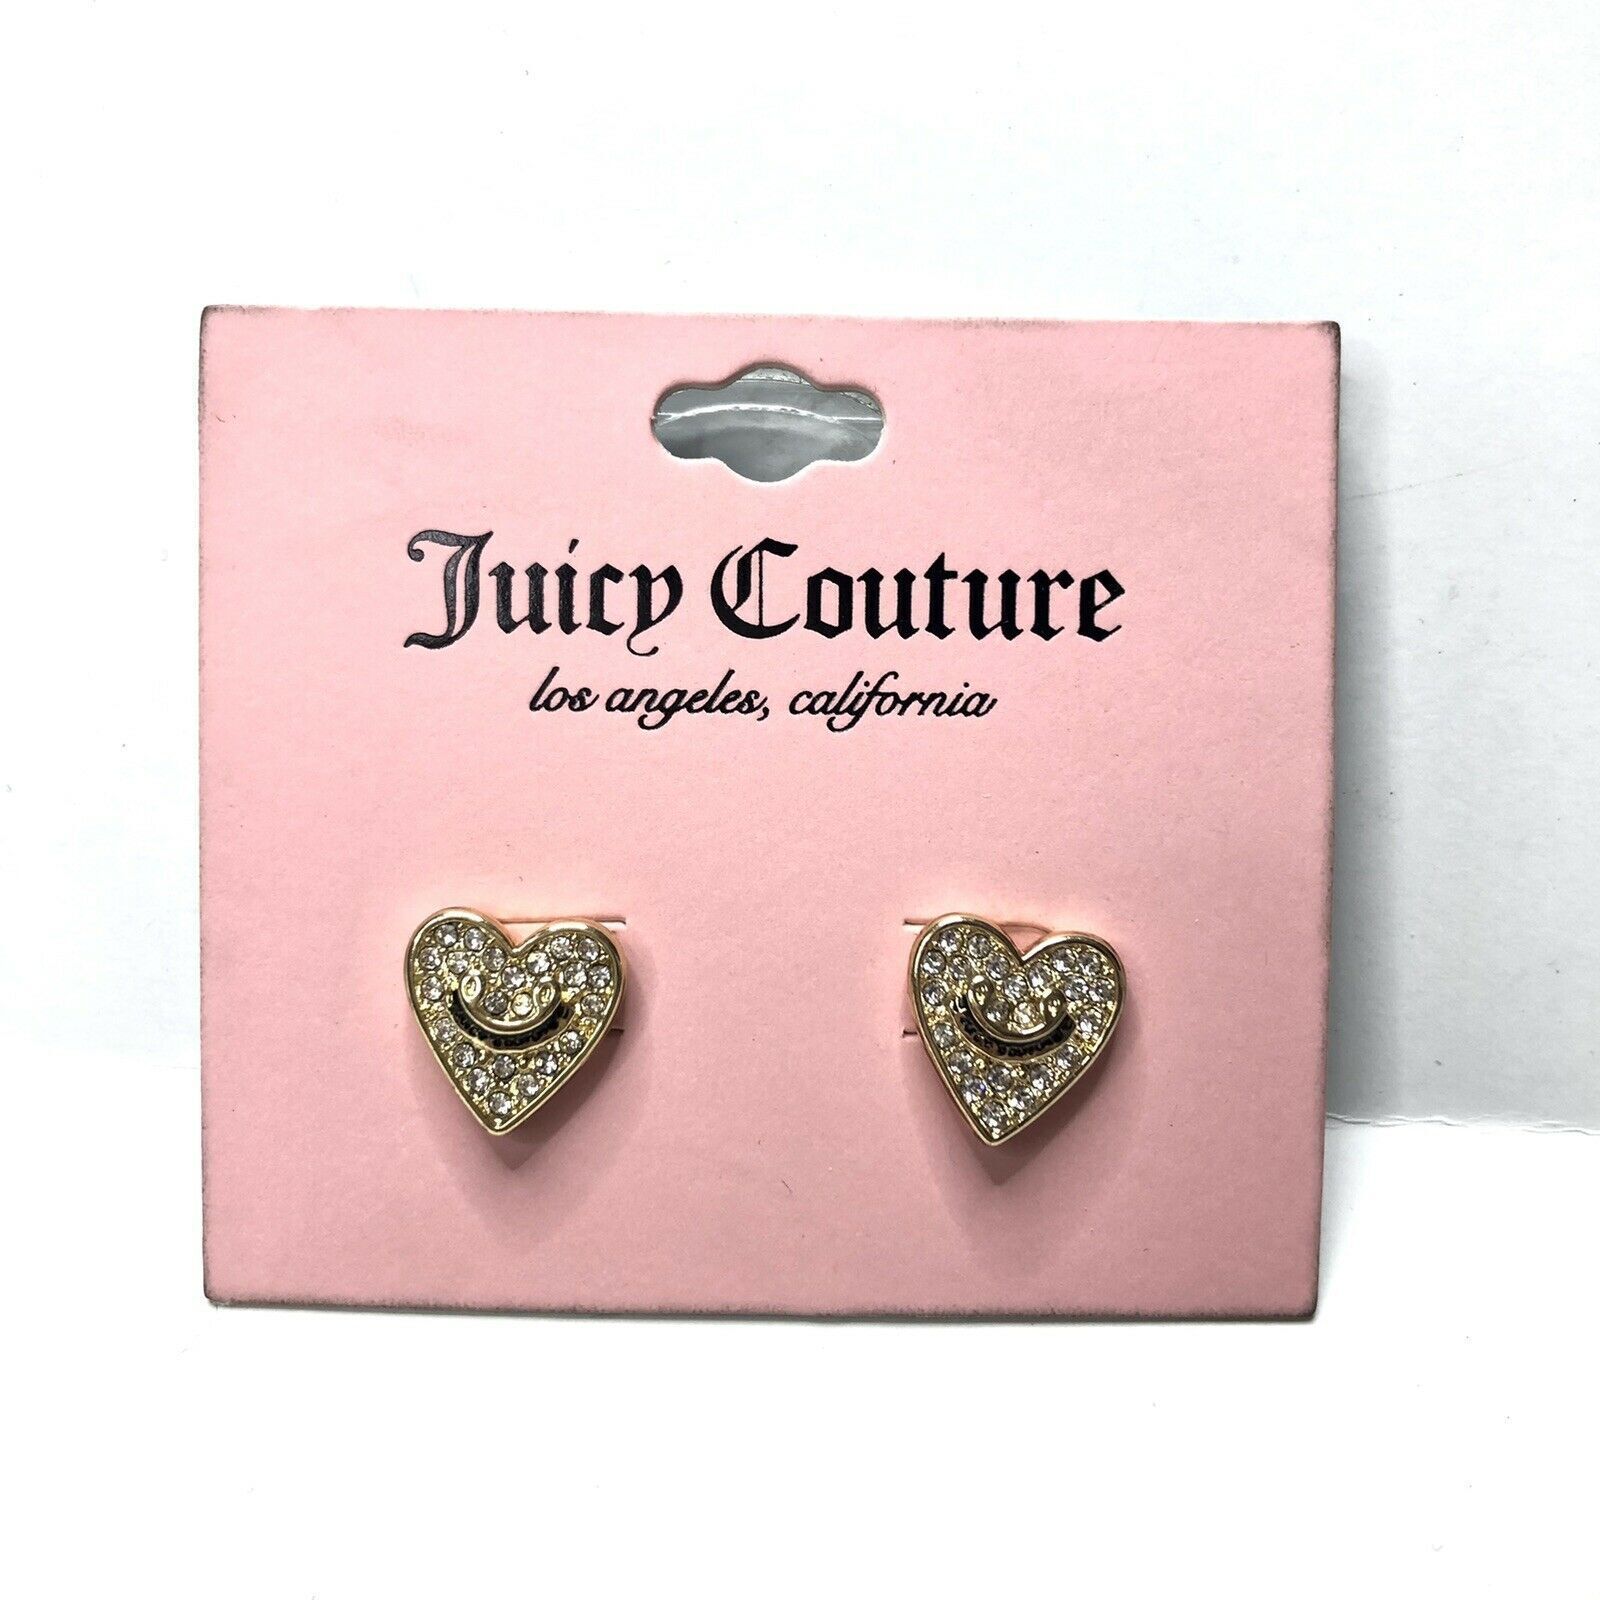 Juicy Couture Gold Tone Heart Stud Earrings W/ Rhinestones & Logo P10031-42 NEW - $11.00